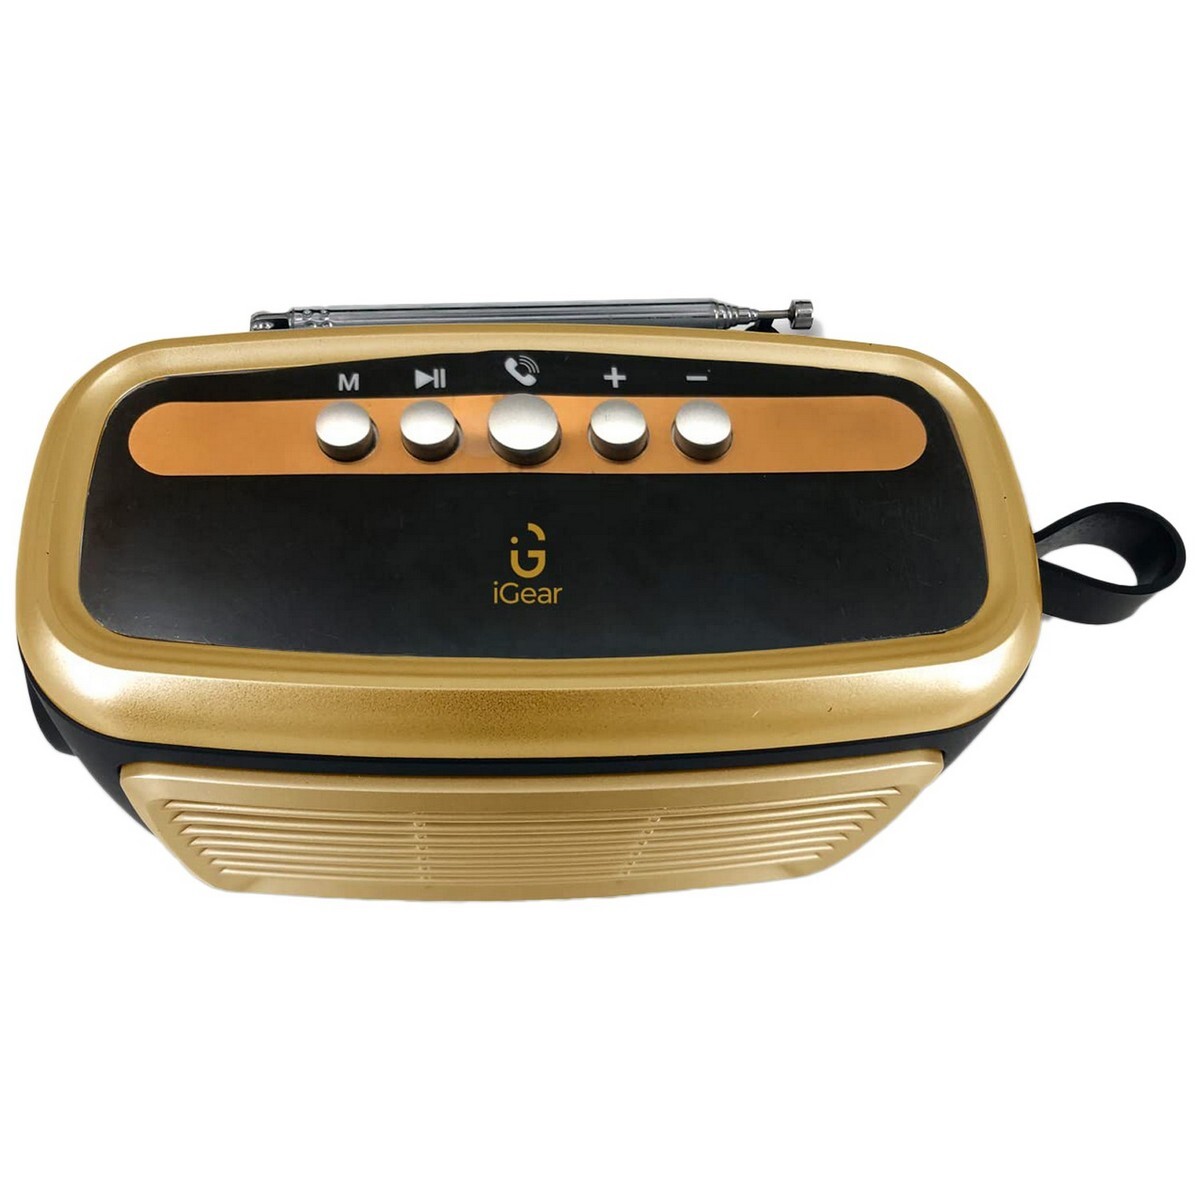 iGear Goldie 5 Watt Portable Bluetooth Speaker G-1145, Gold Black